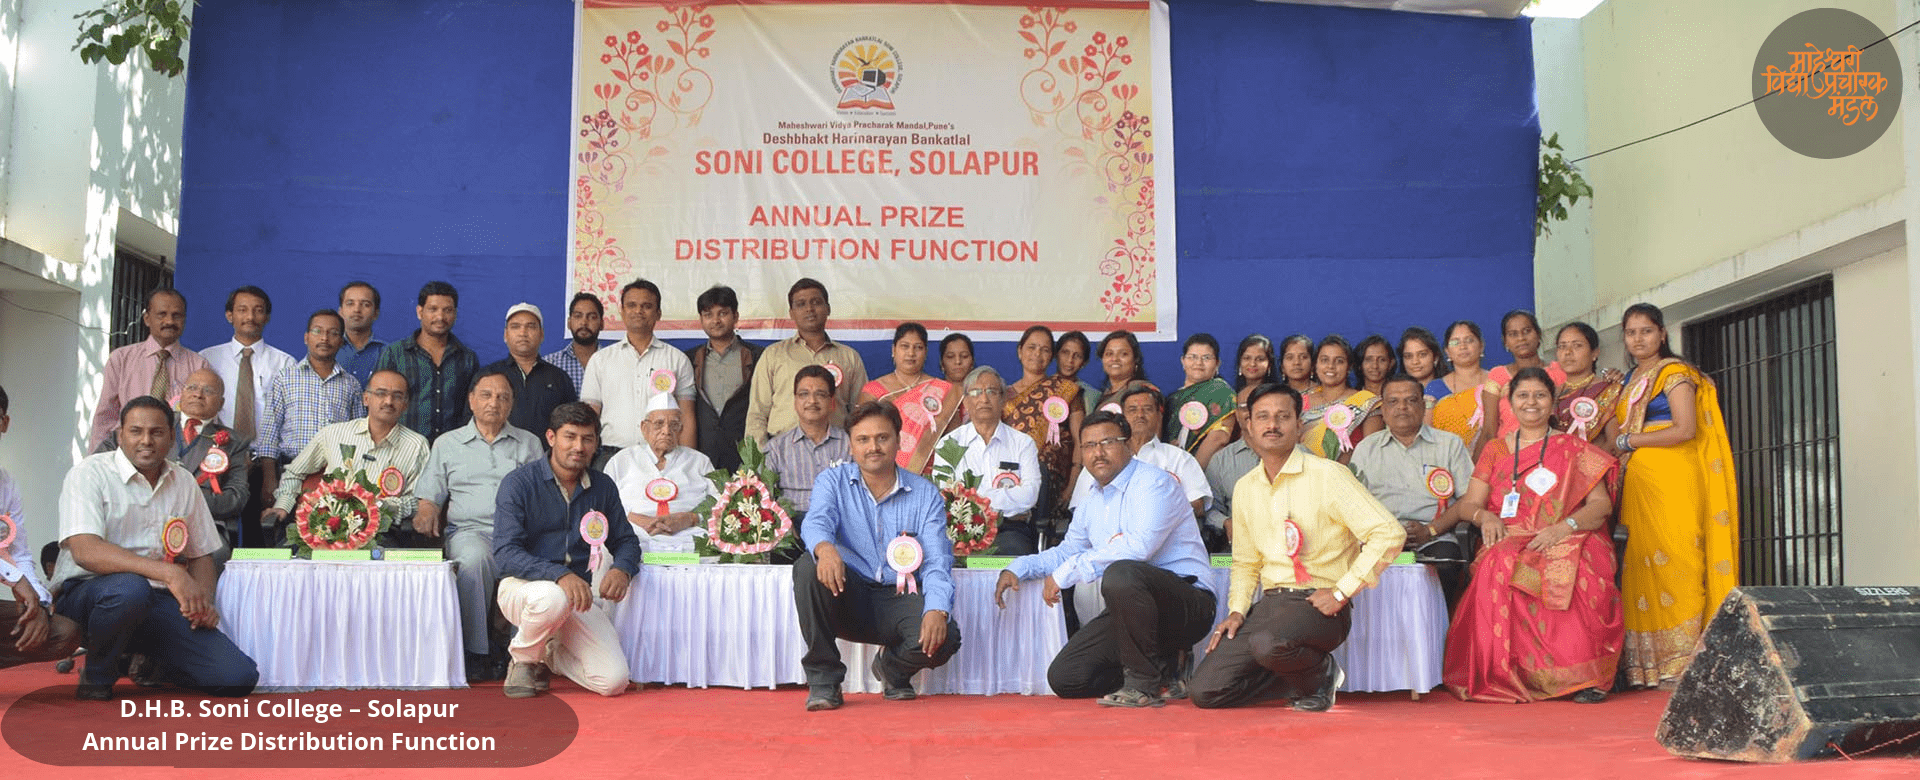 4.	D.H.B. Soni College – Solapur Annual Prize Distribution Function